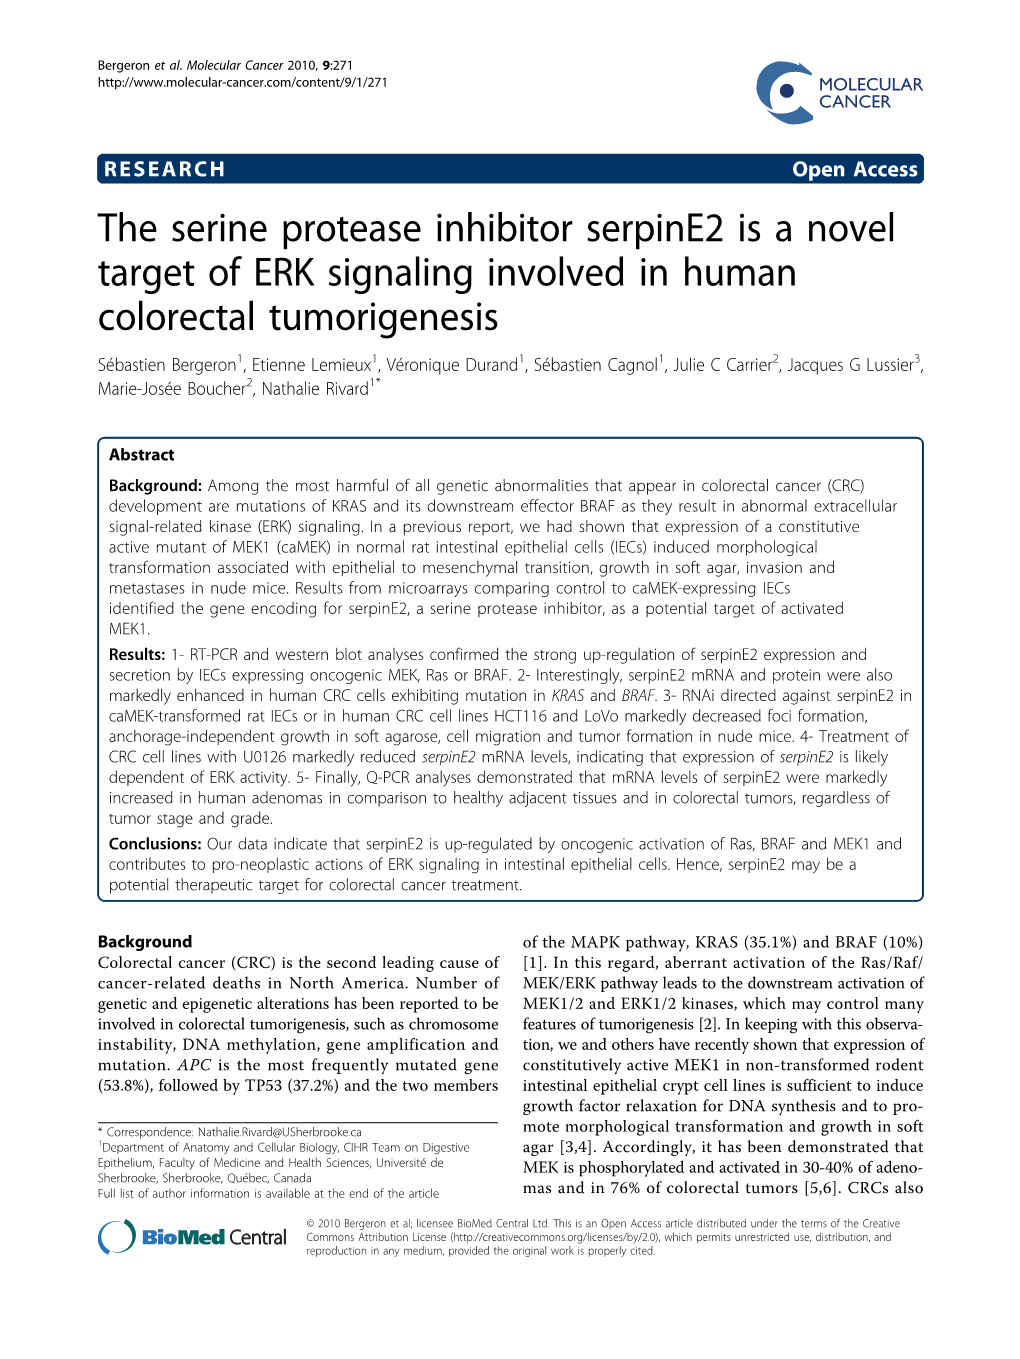 The Serine Protease Inhibitor Serpine2 Is a Novel Target of ERK Signaling